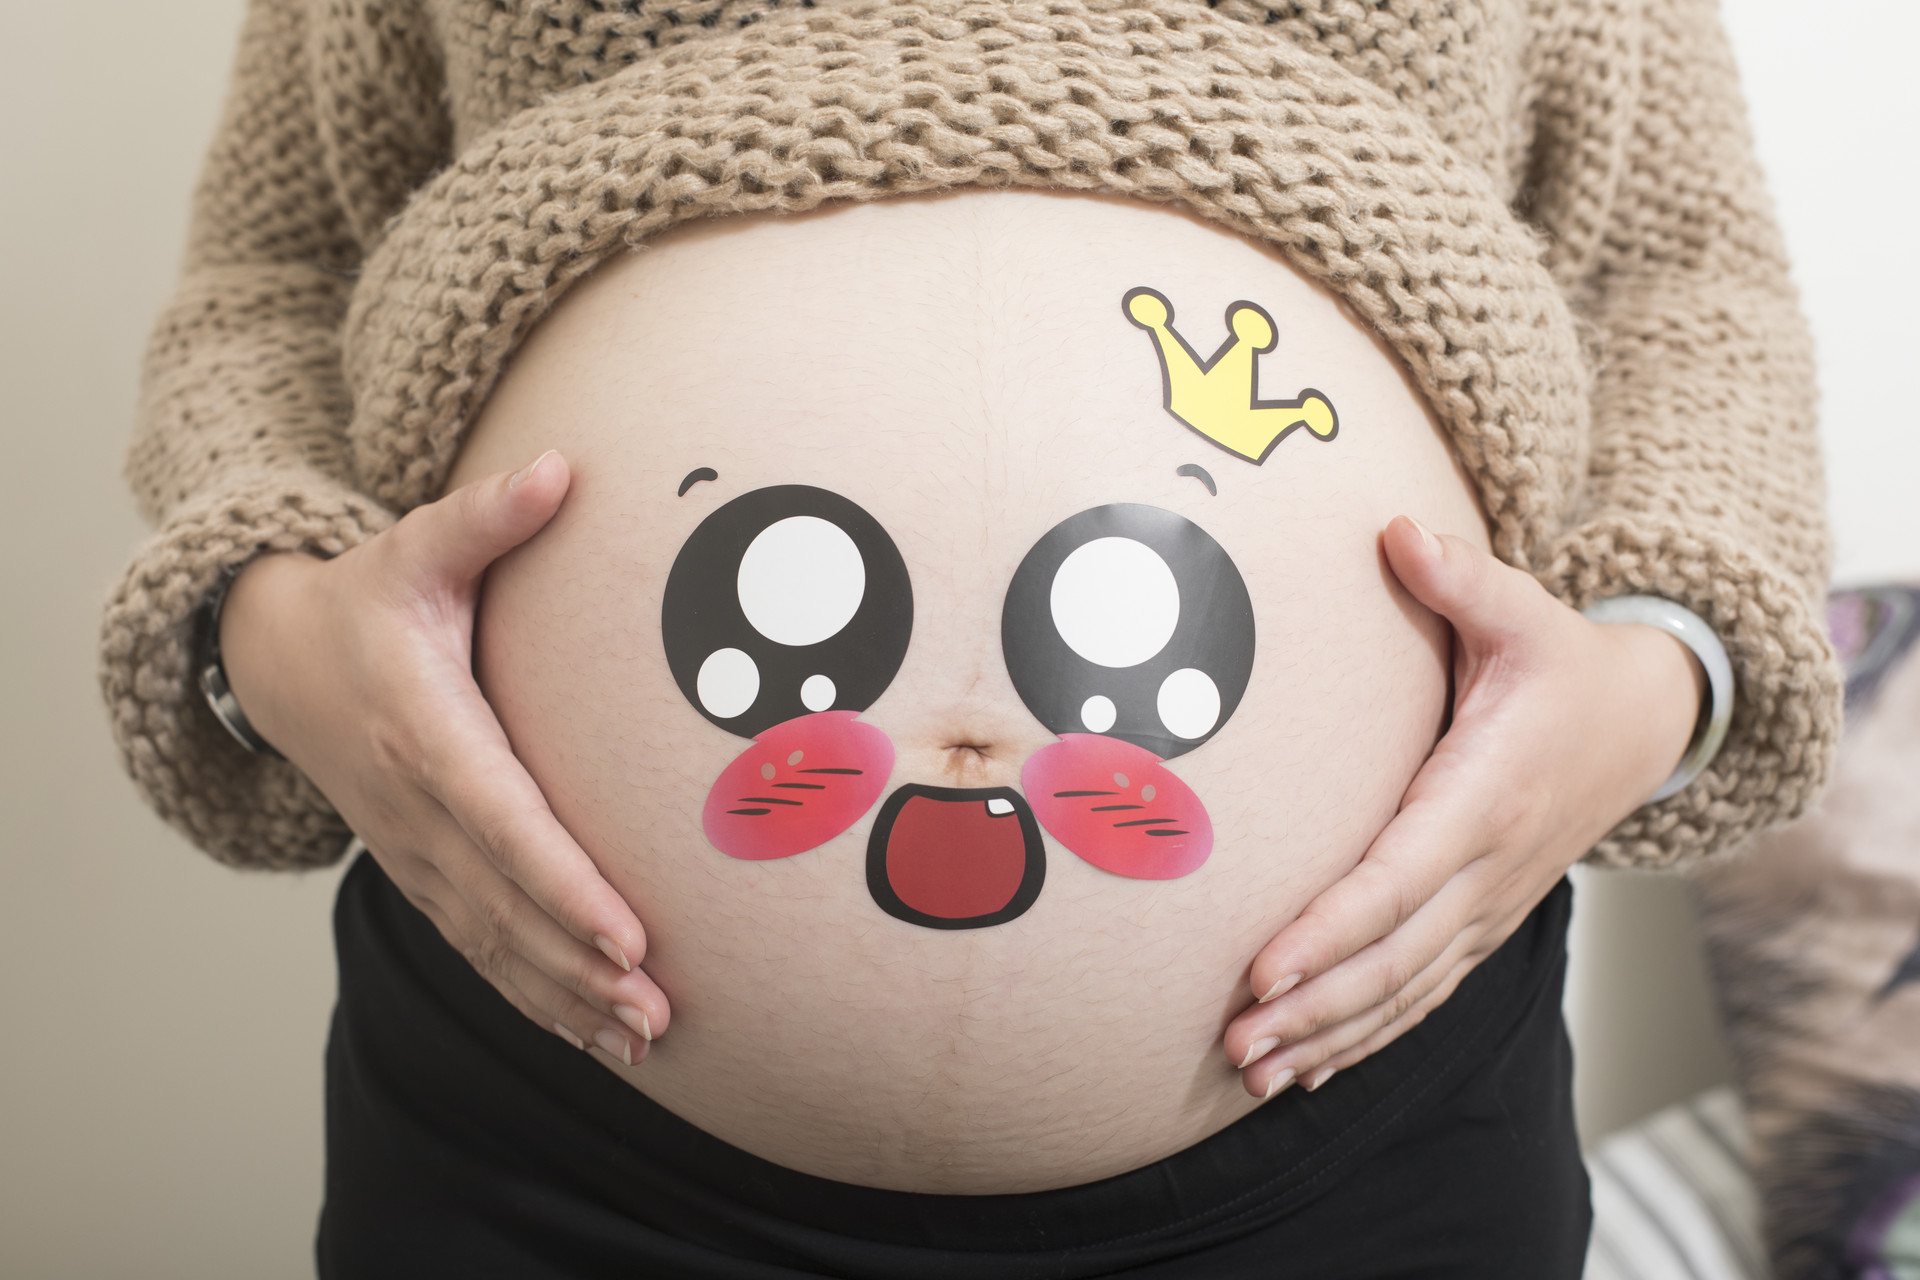 <font color="red">狼疮</font>患者妊娠期使用羟氯喹安全性和疗效如何？